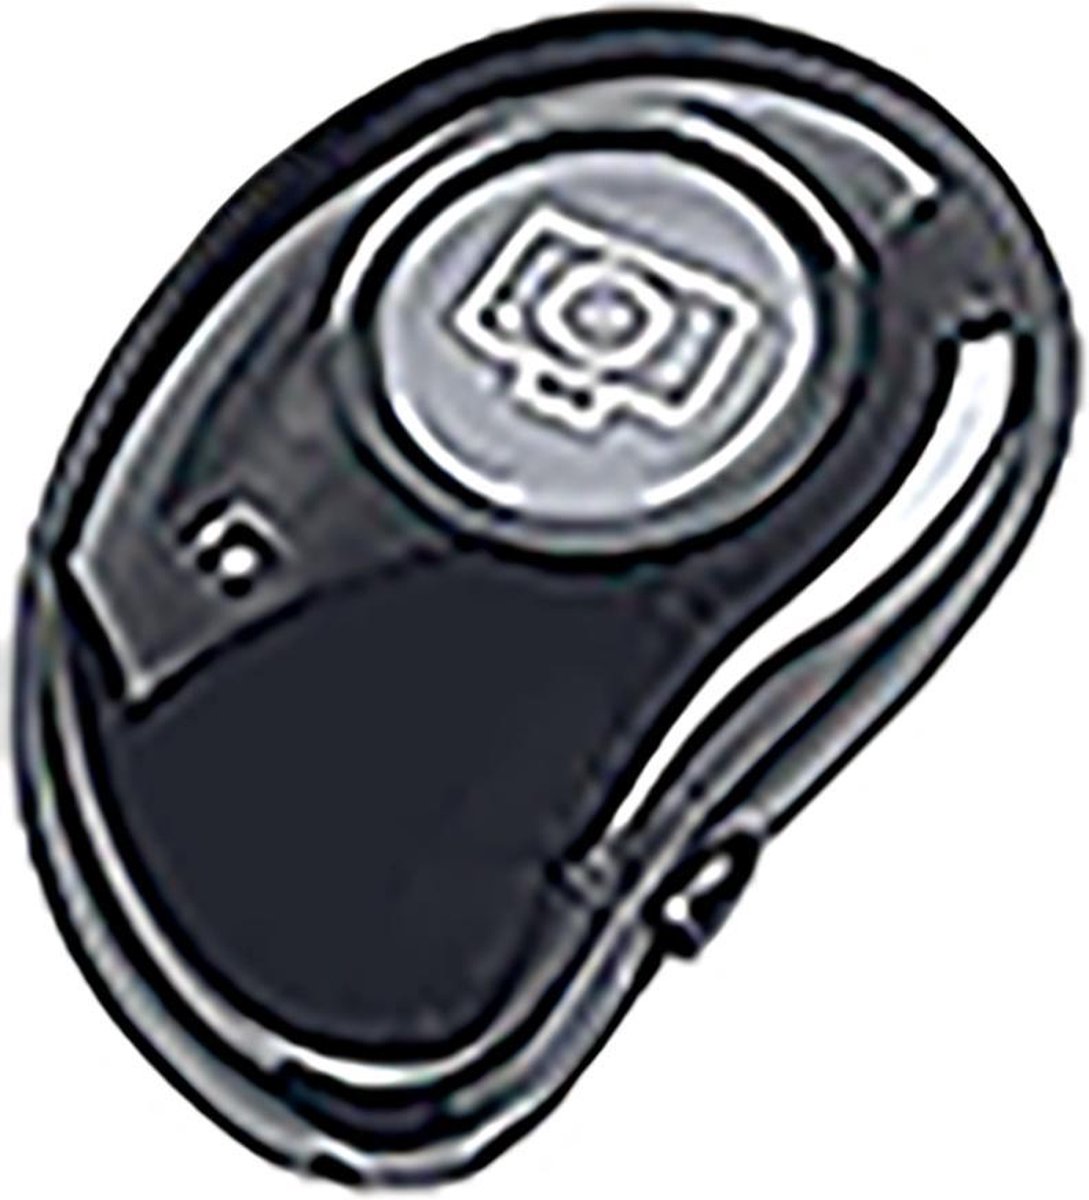 Bluetooth remote shutter – afstandsbediening voor smartphone camera – ZWART - Merkloos